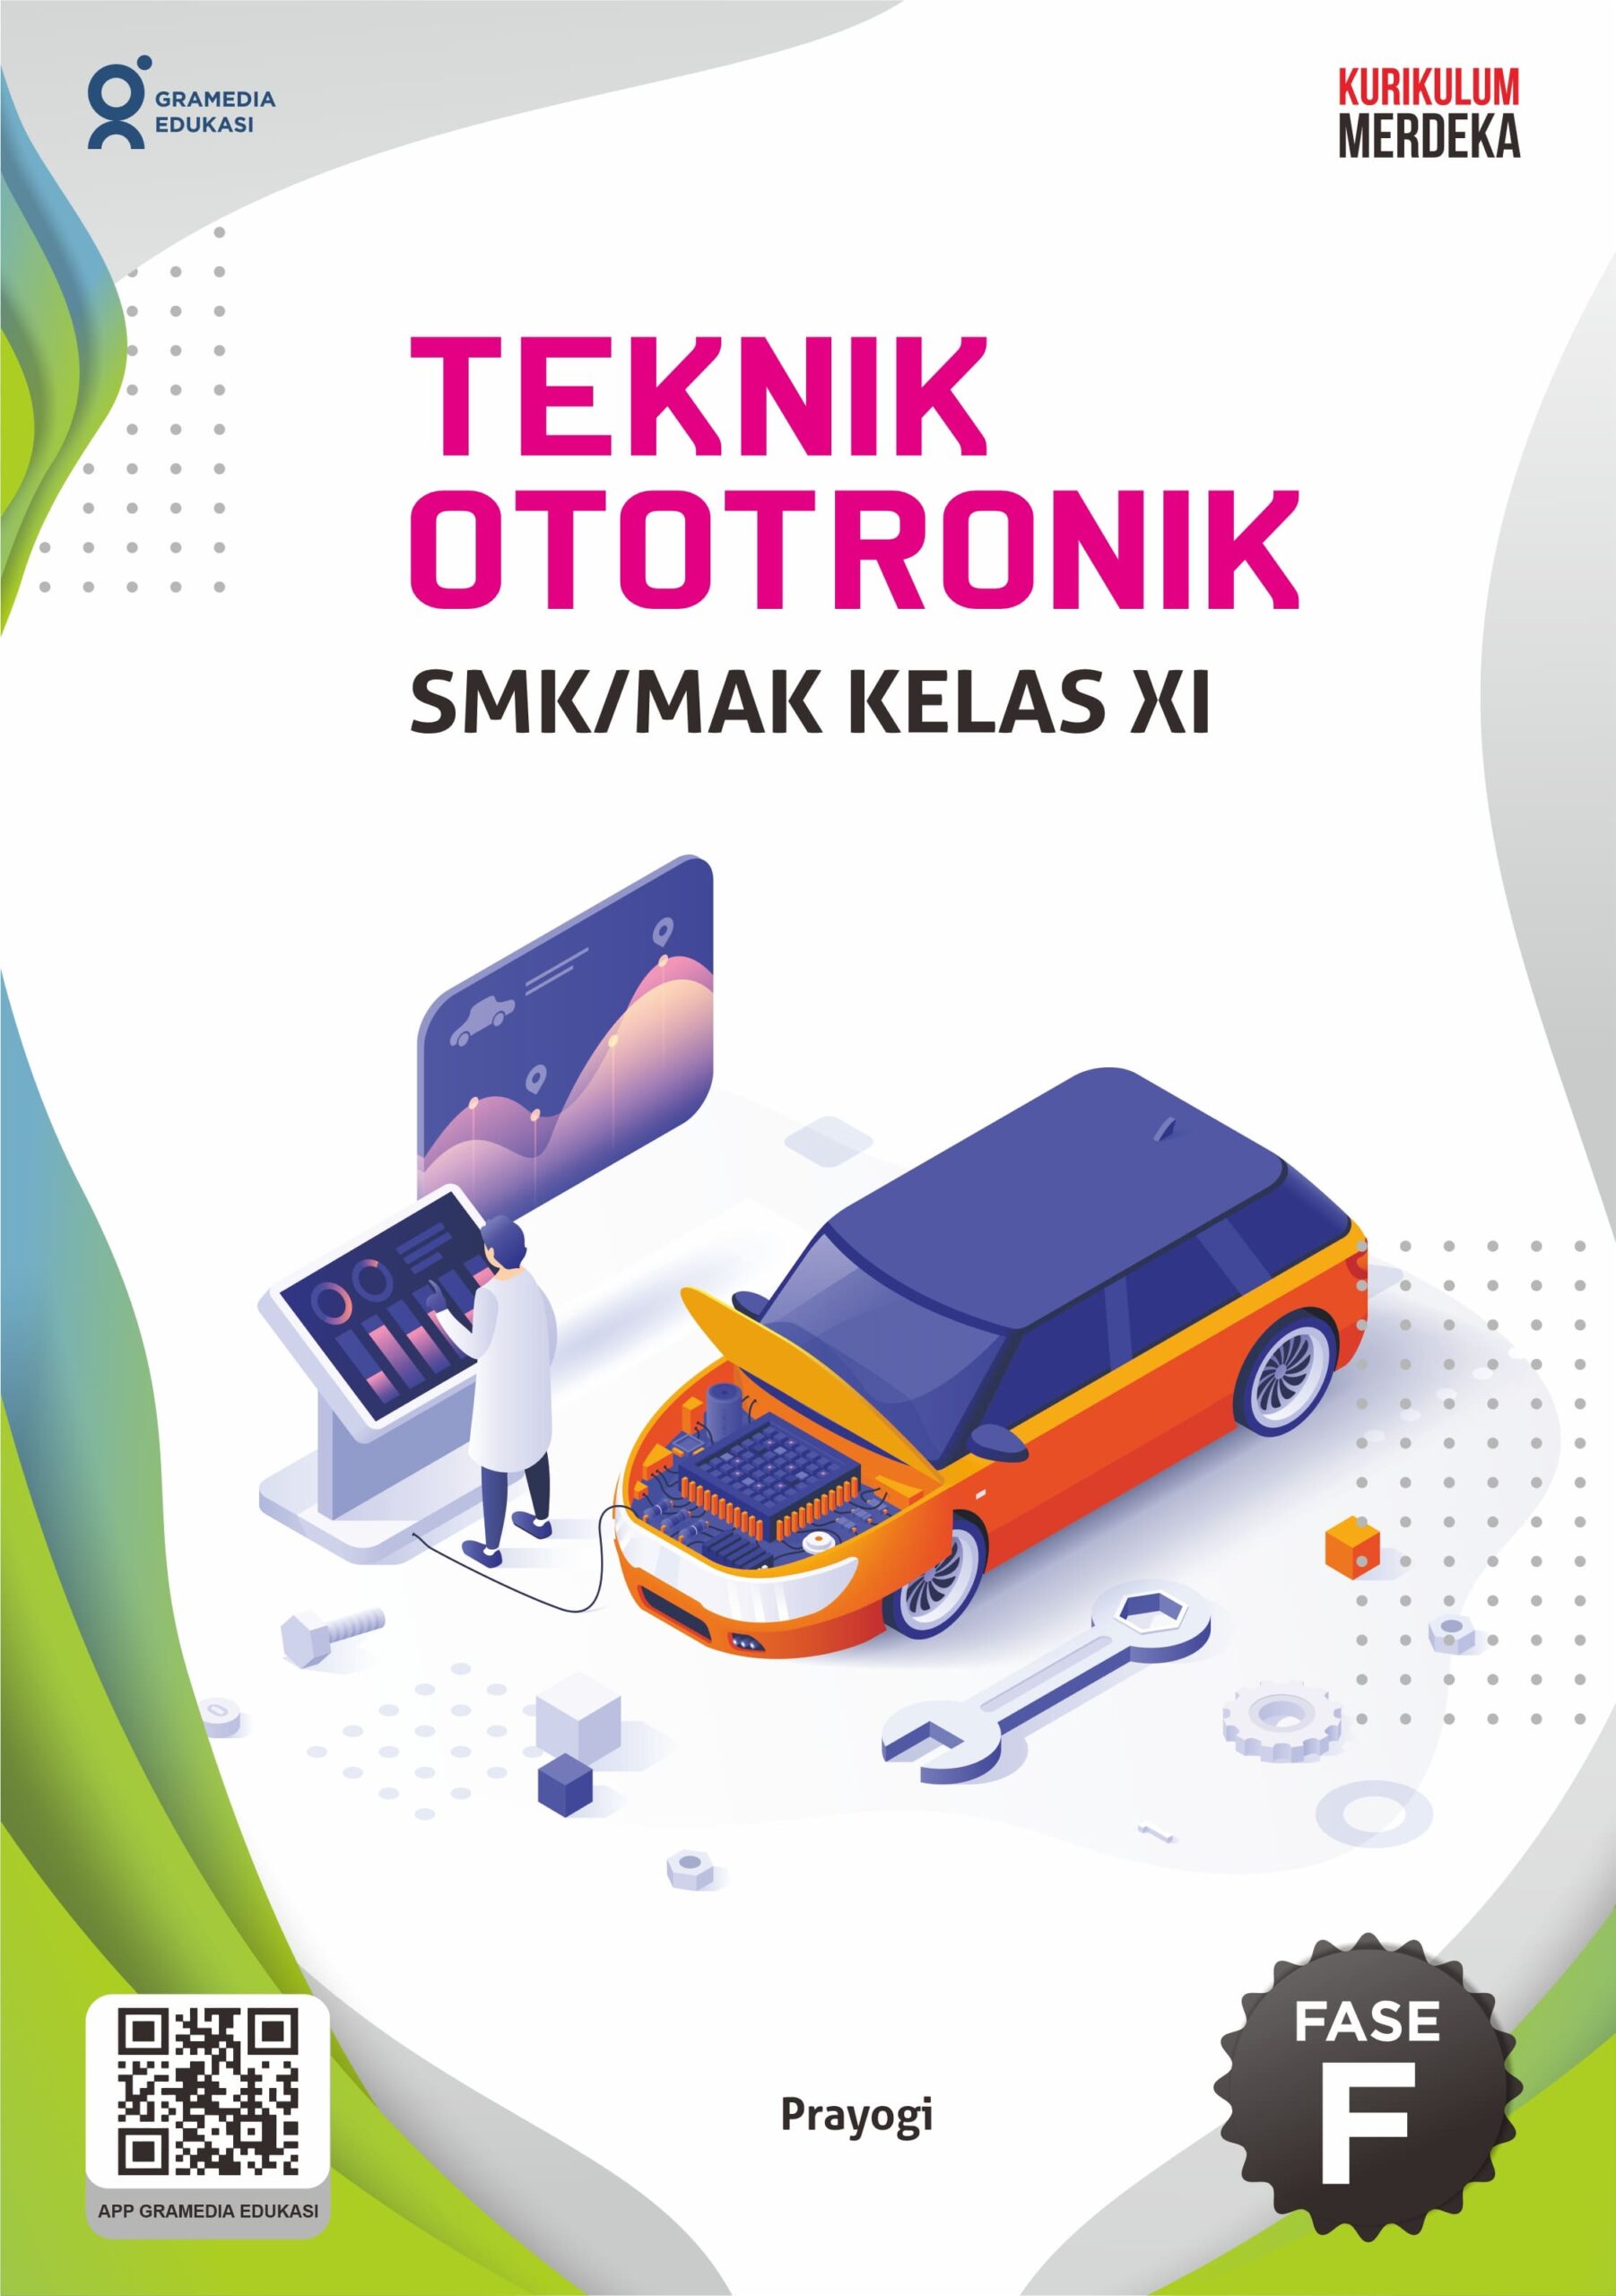 Teknik ototronik SMK/MAK Kelas XI